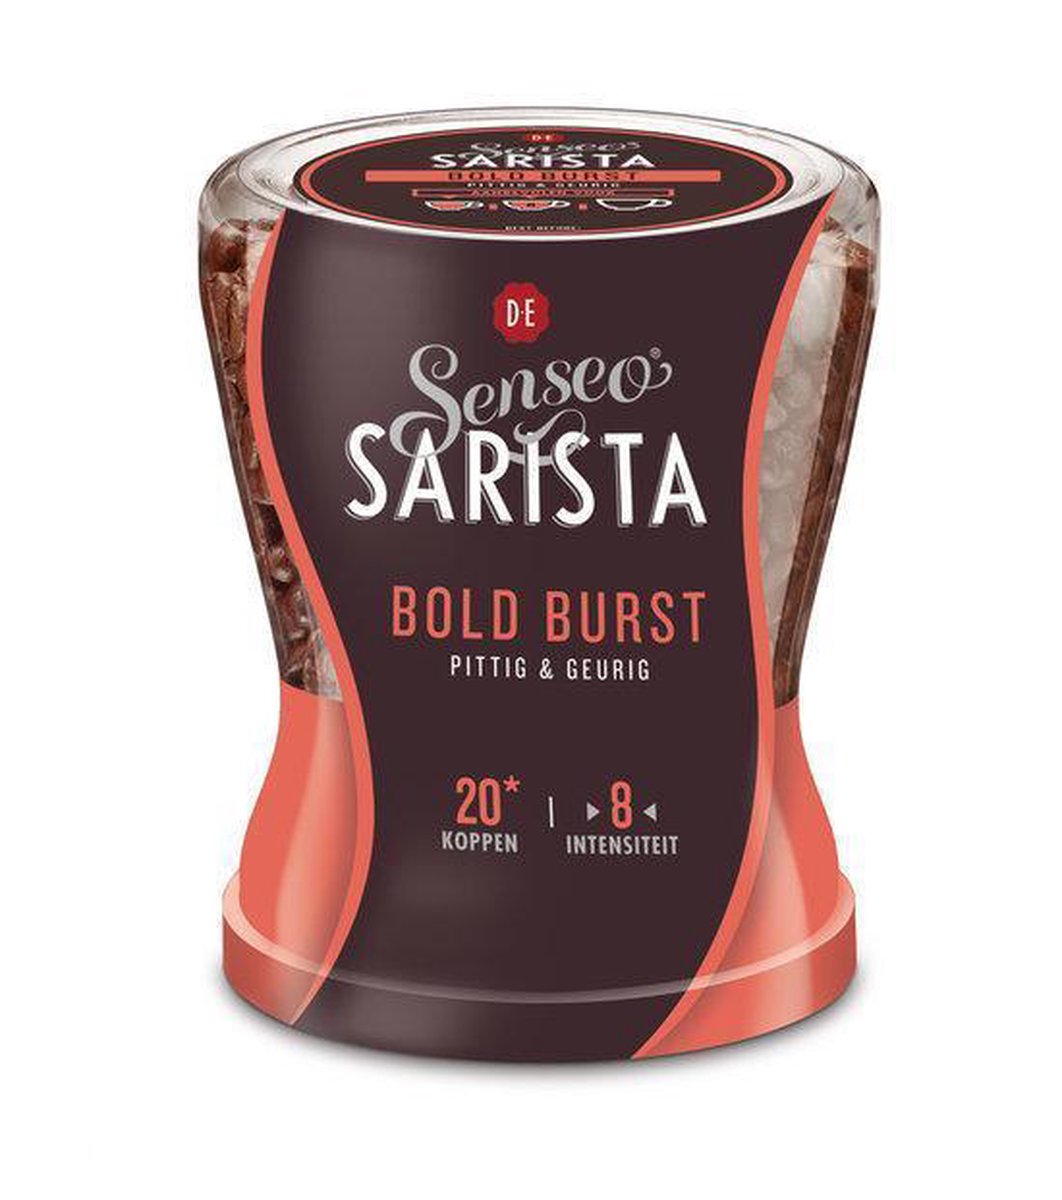 Uitverkoop morfine item Senseo Sarista Bold Burst koffiebonen - 3 stuks | bol.com